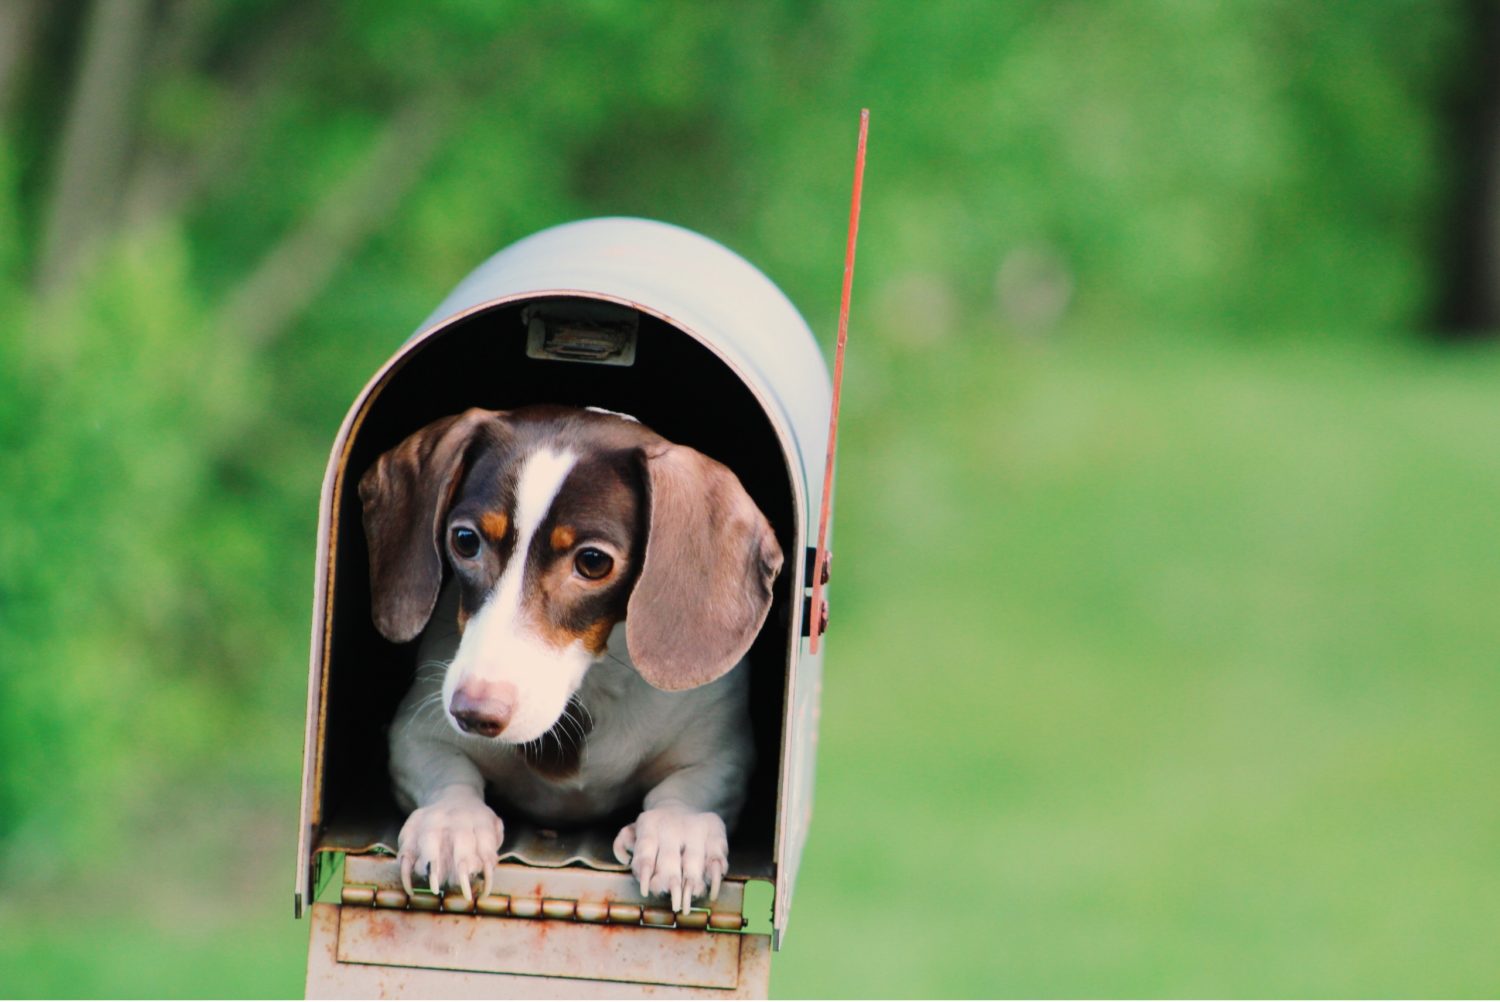 Dog Inside the Mailbox